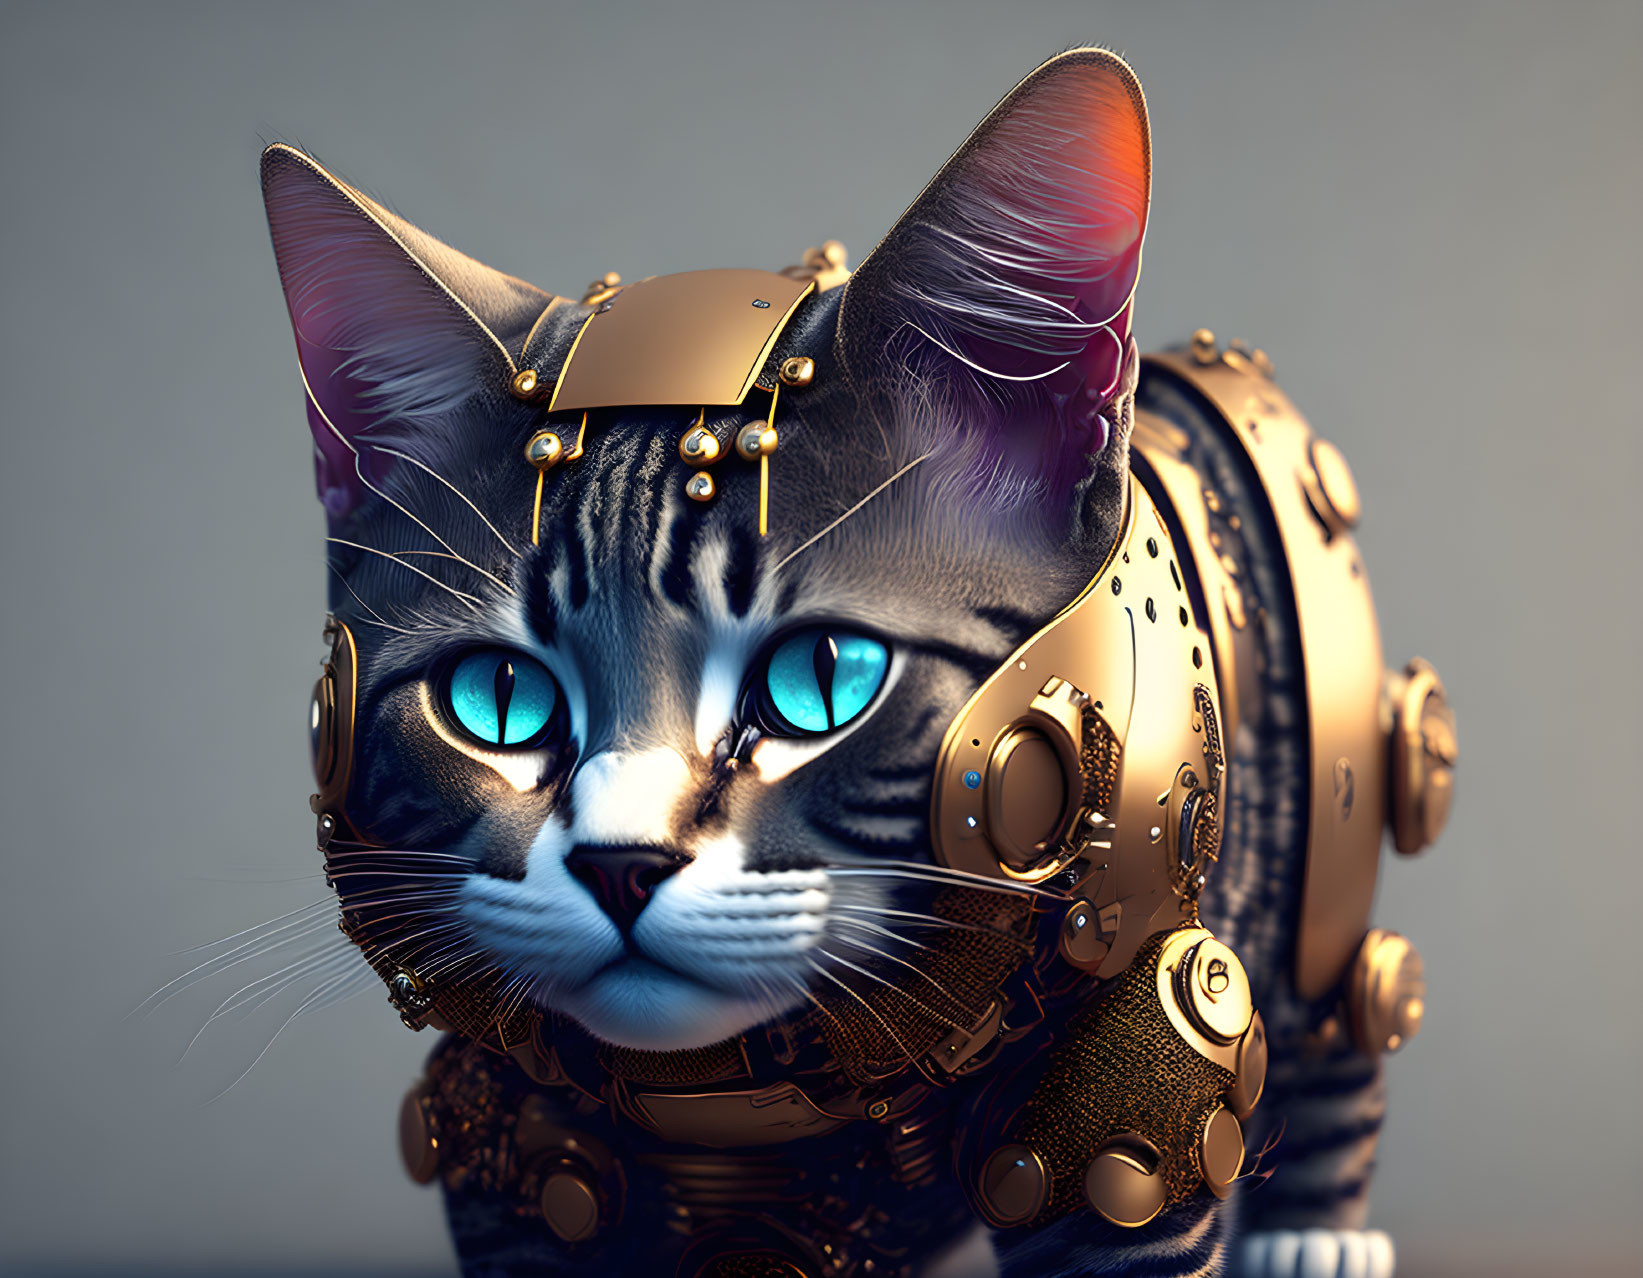 Steampunk-inspired cat digital artwork with brass elements